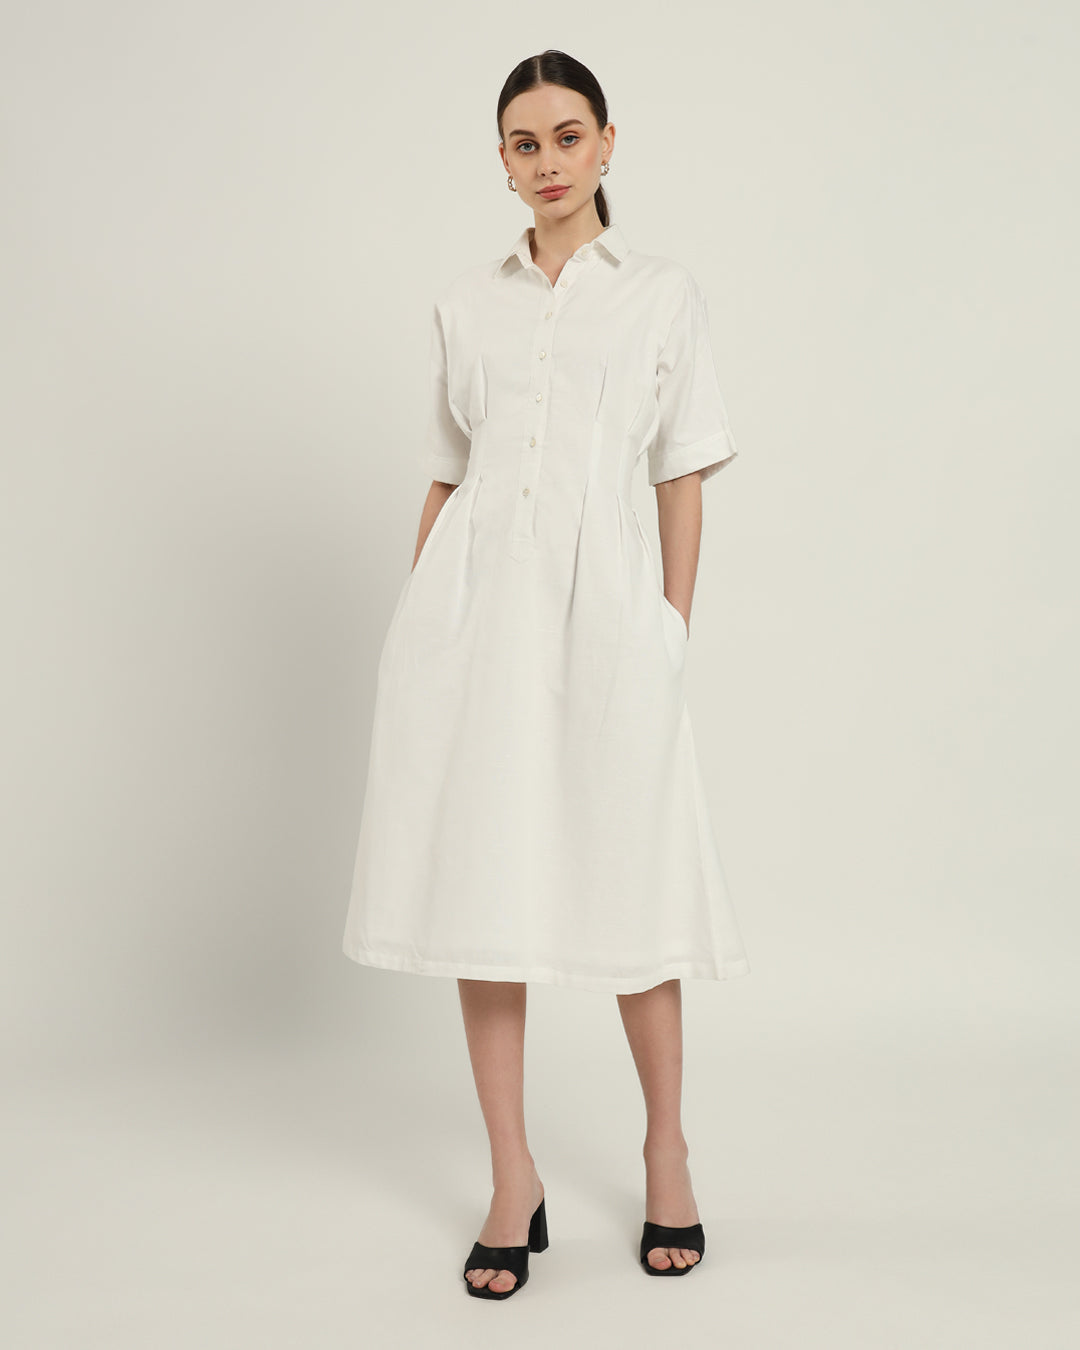 The Salford Daisy White Linen Dress